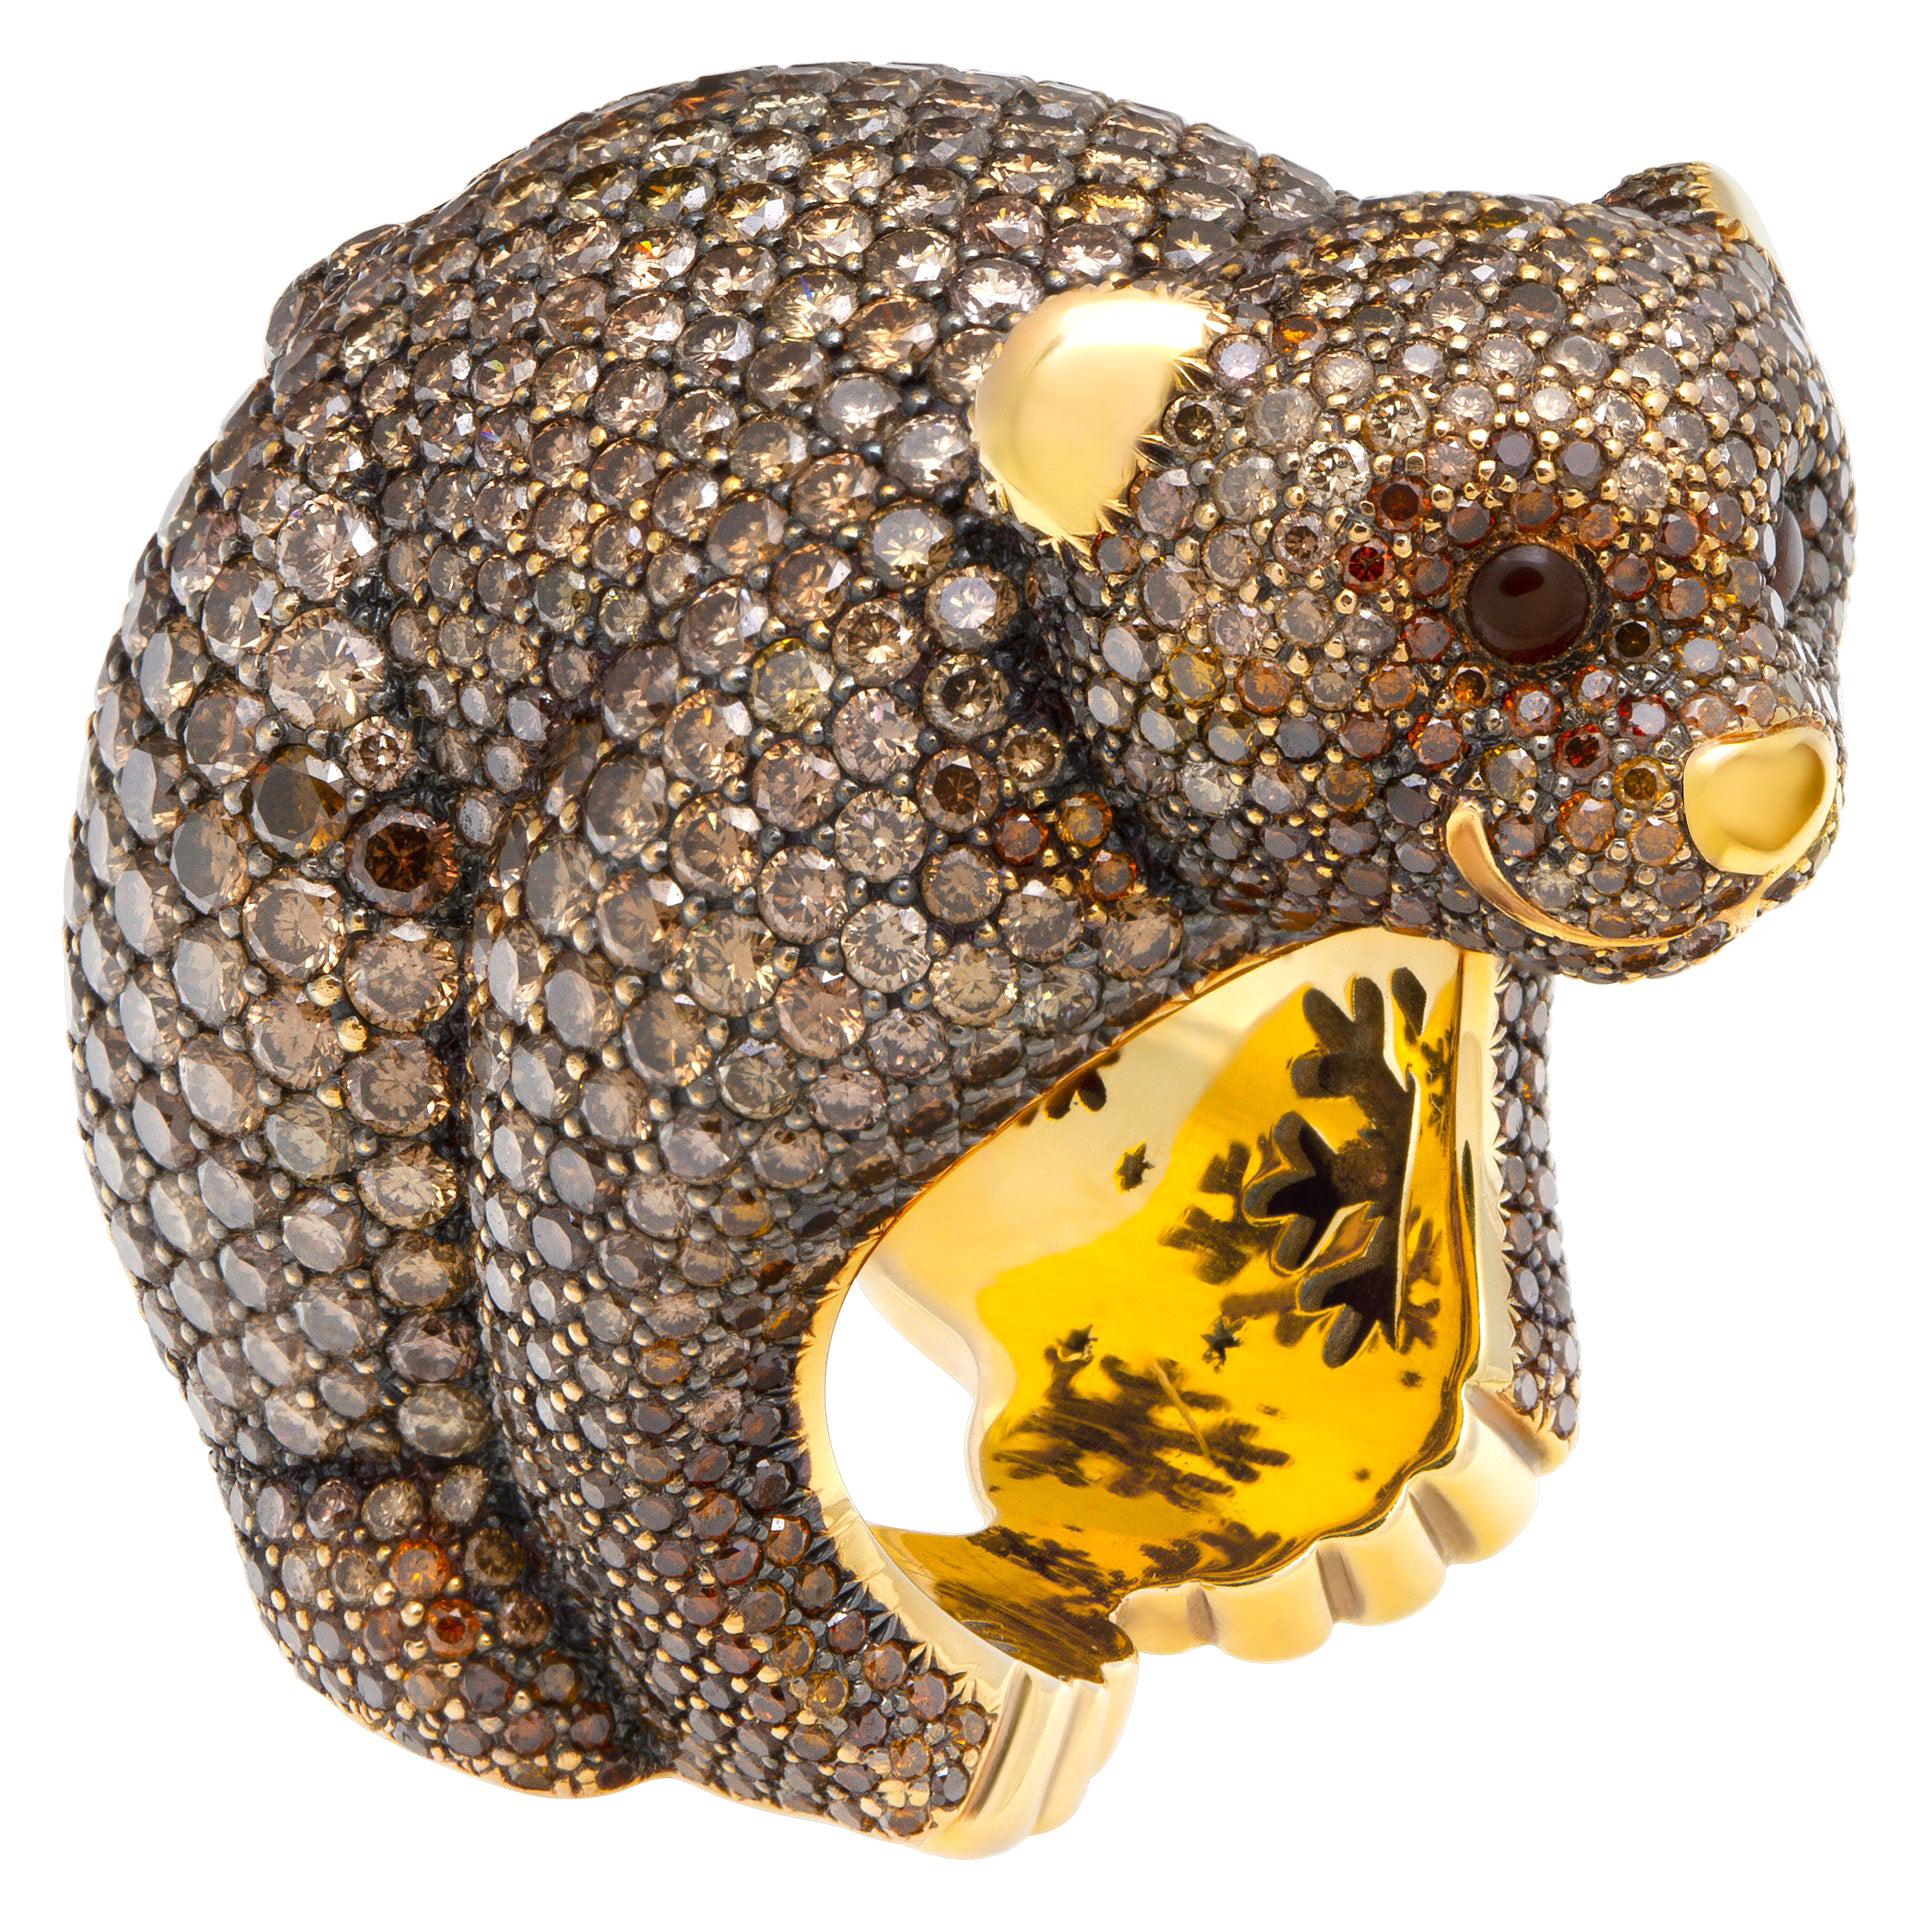 Masterpiece Chopard Diamond Bear "Animal World Collection" Ring in 18 Karat